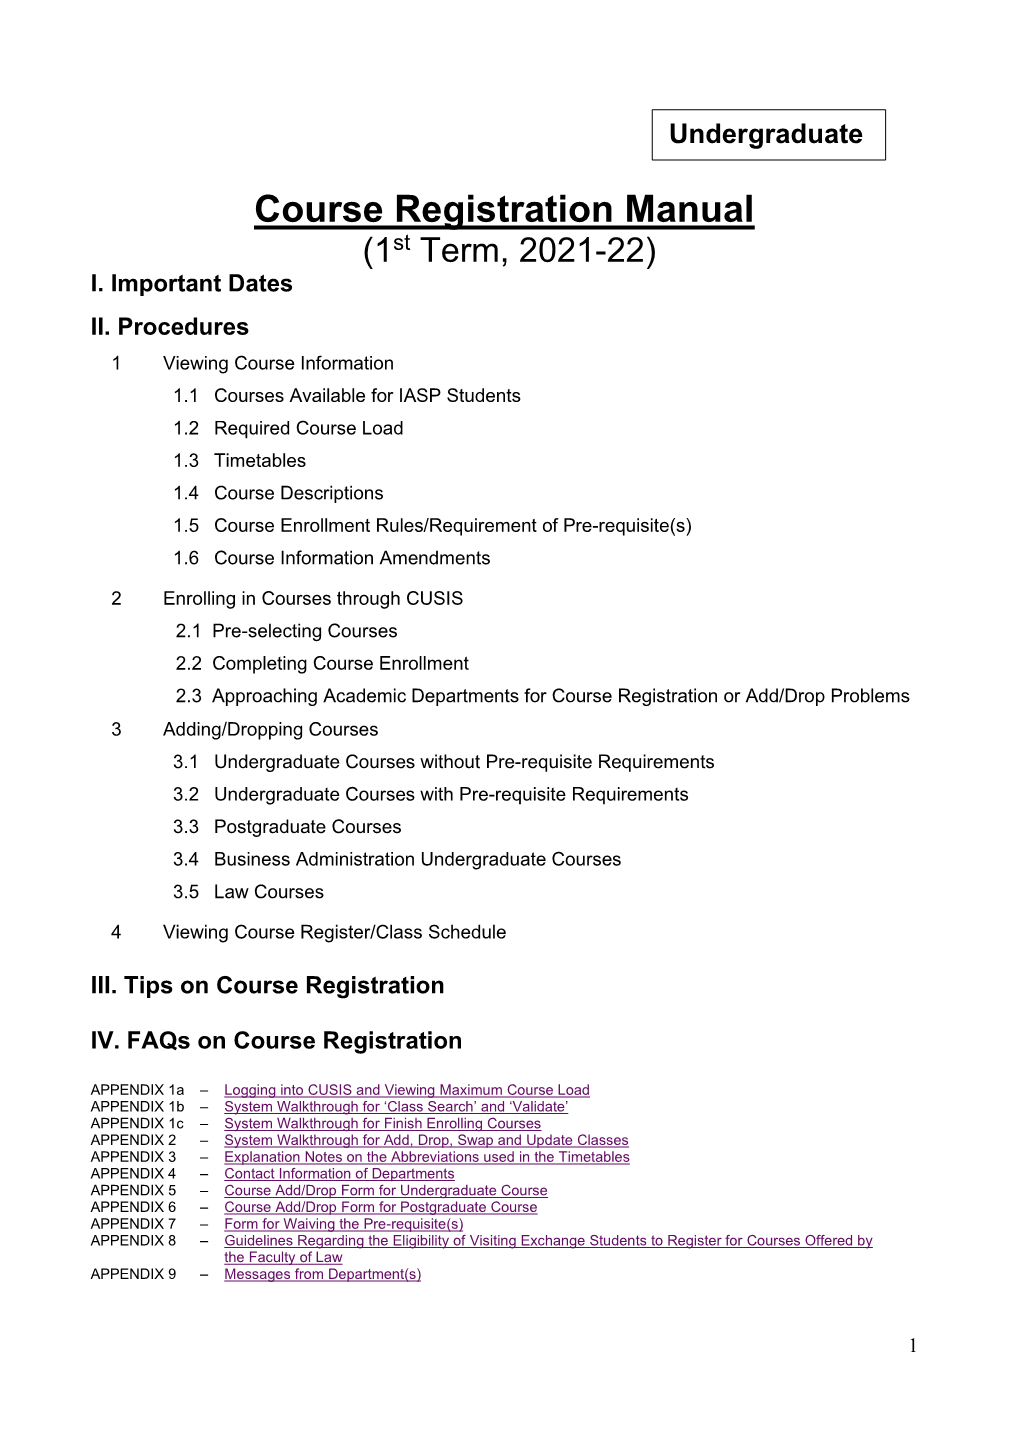 Course Registration Manual (1St Term, 2021-22) I